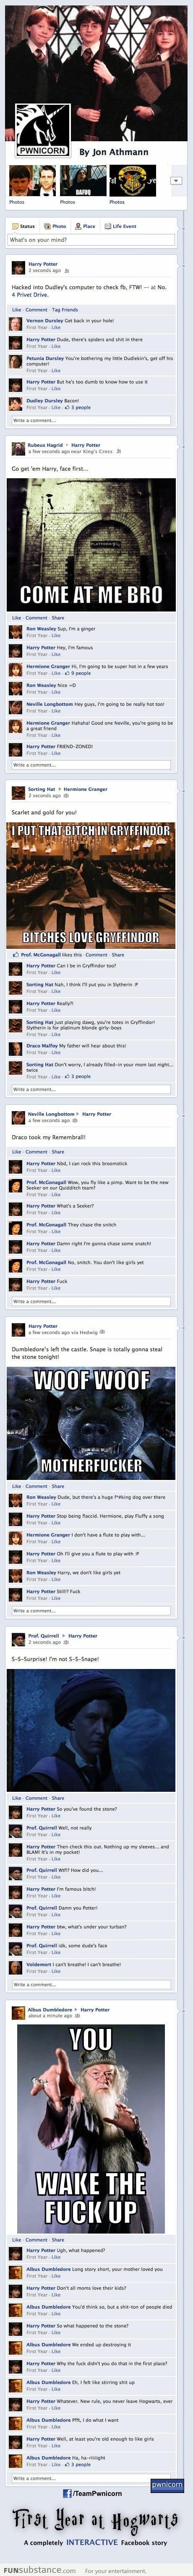 Harry Potter On Facebook